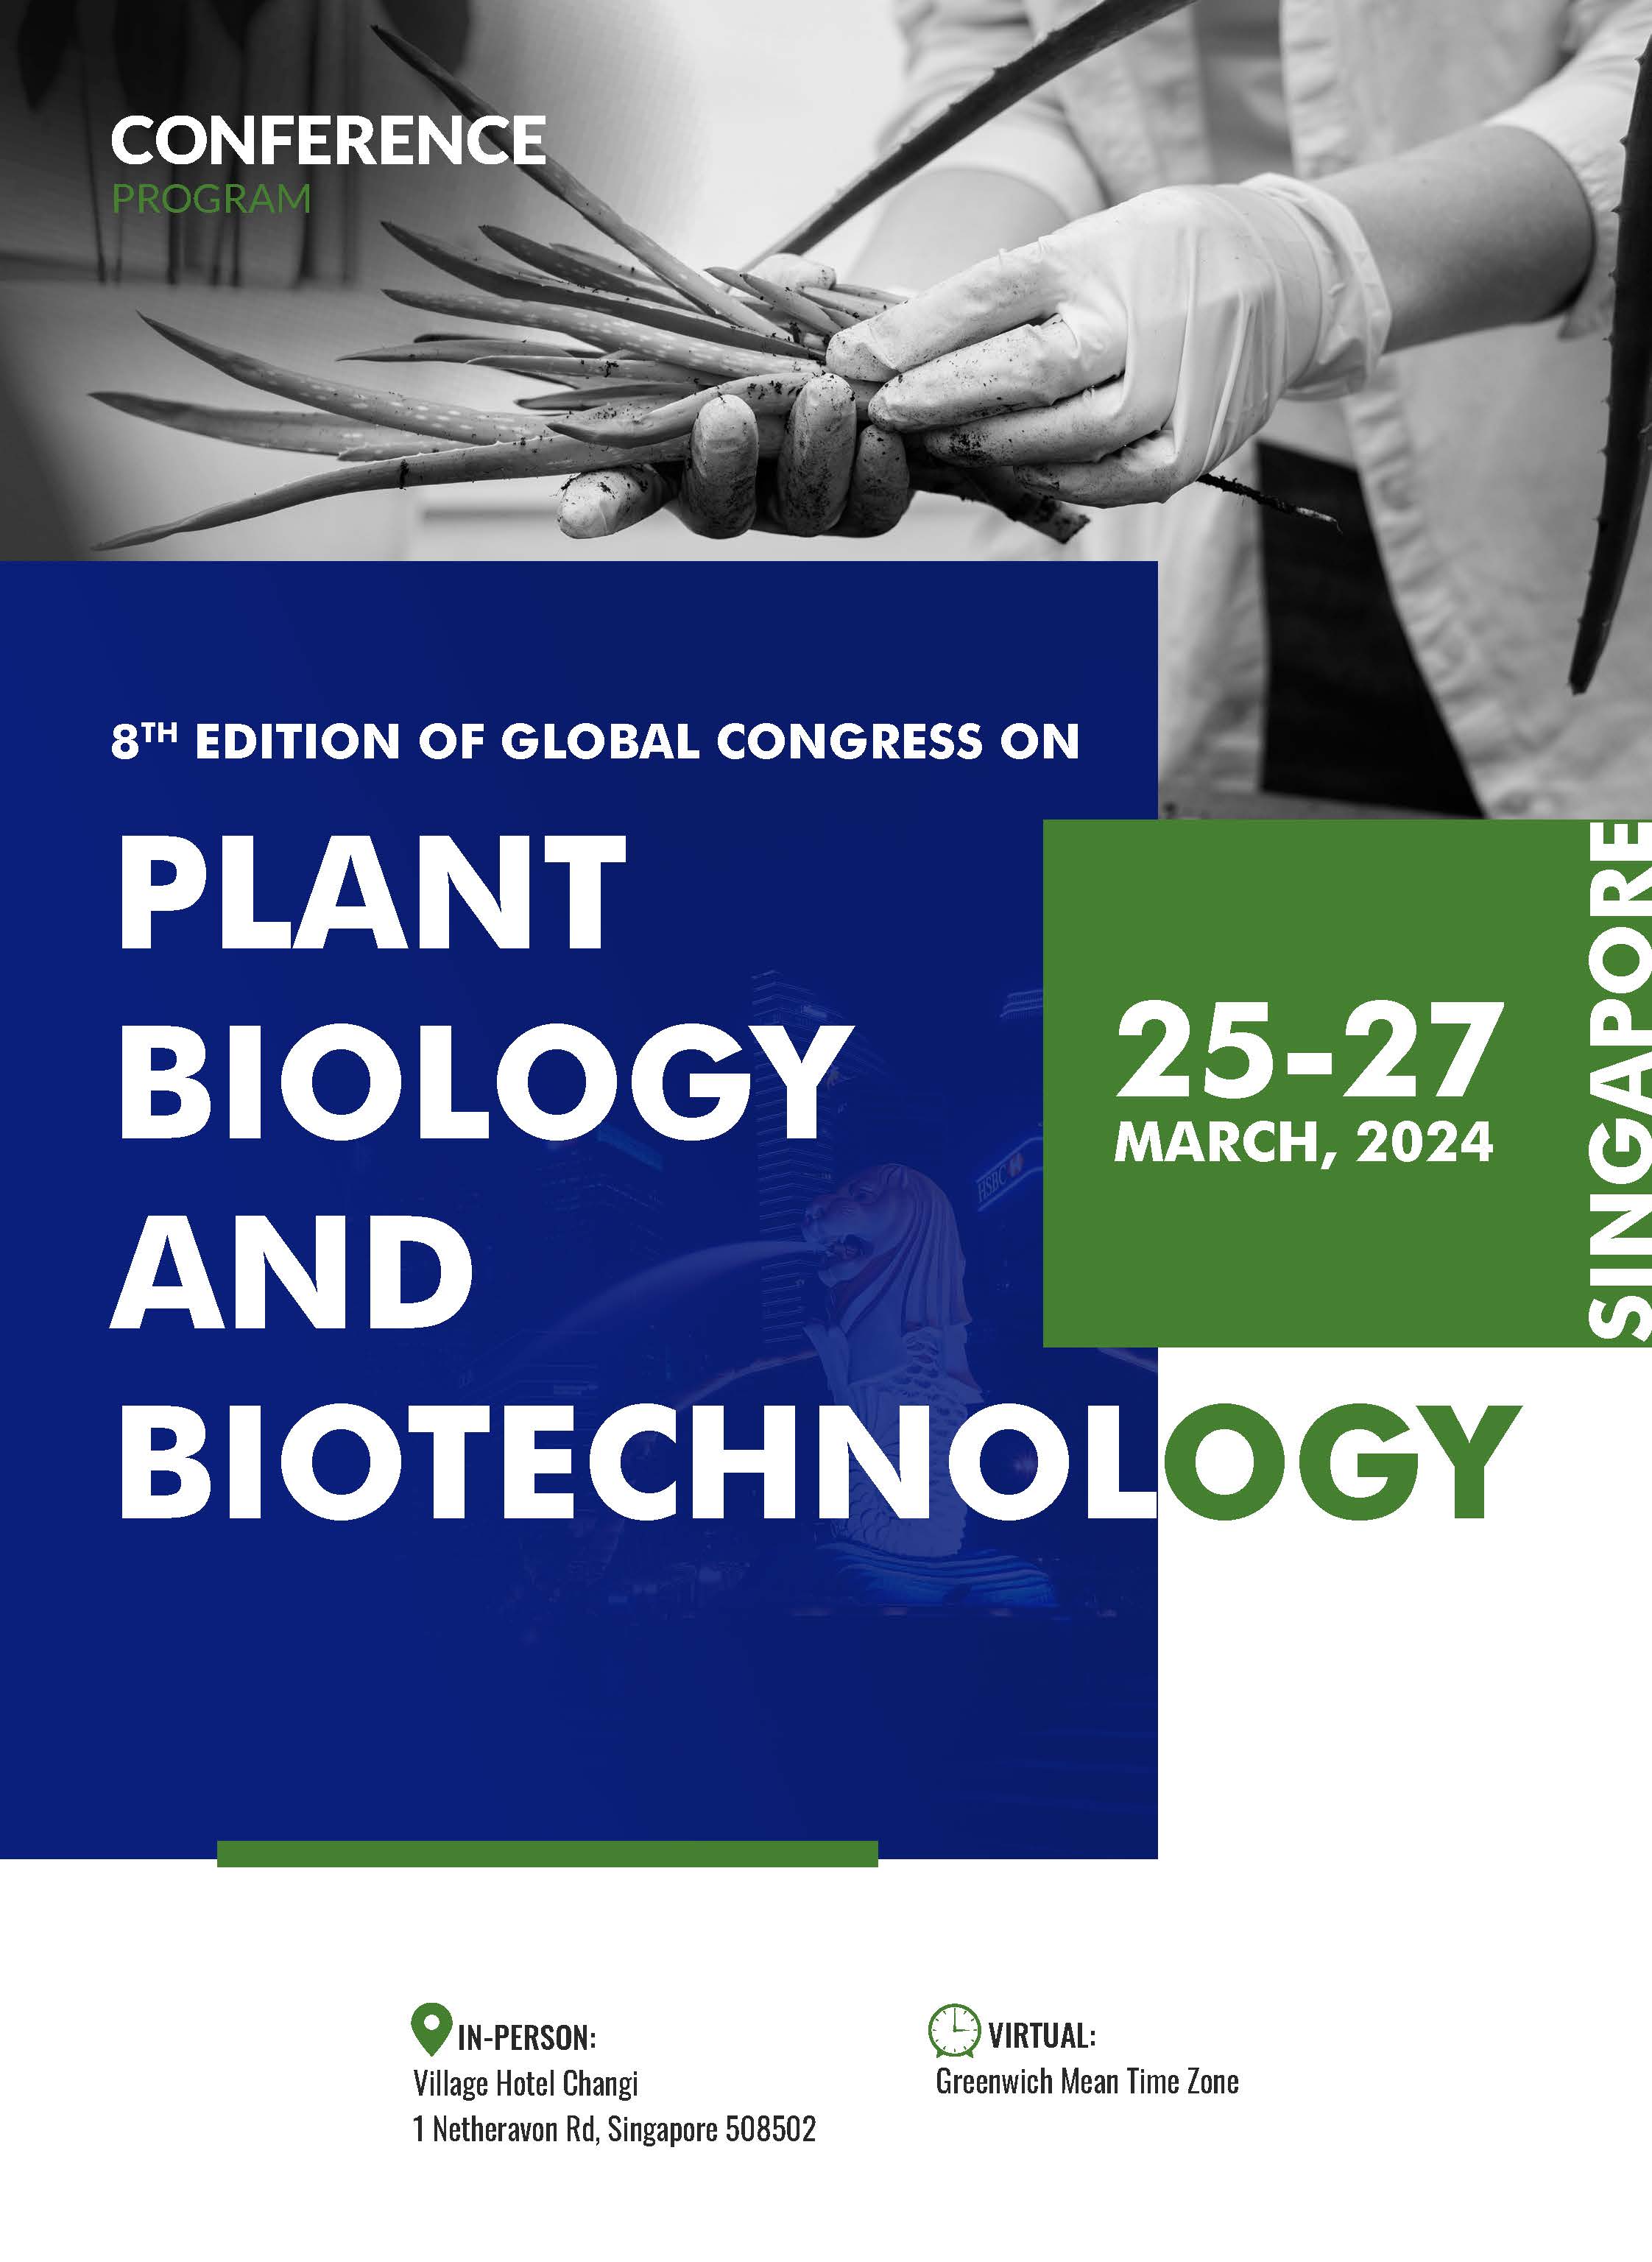 Plant Biology and Biotechnology | Singapore Program